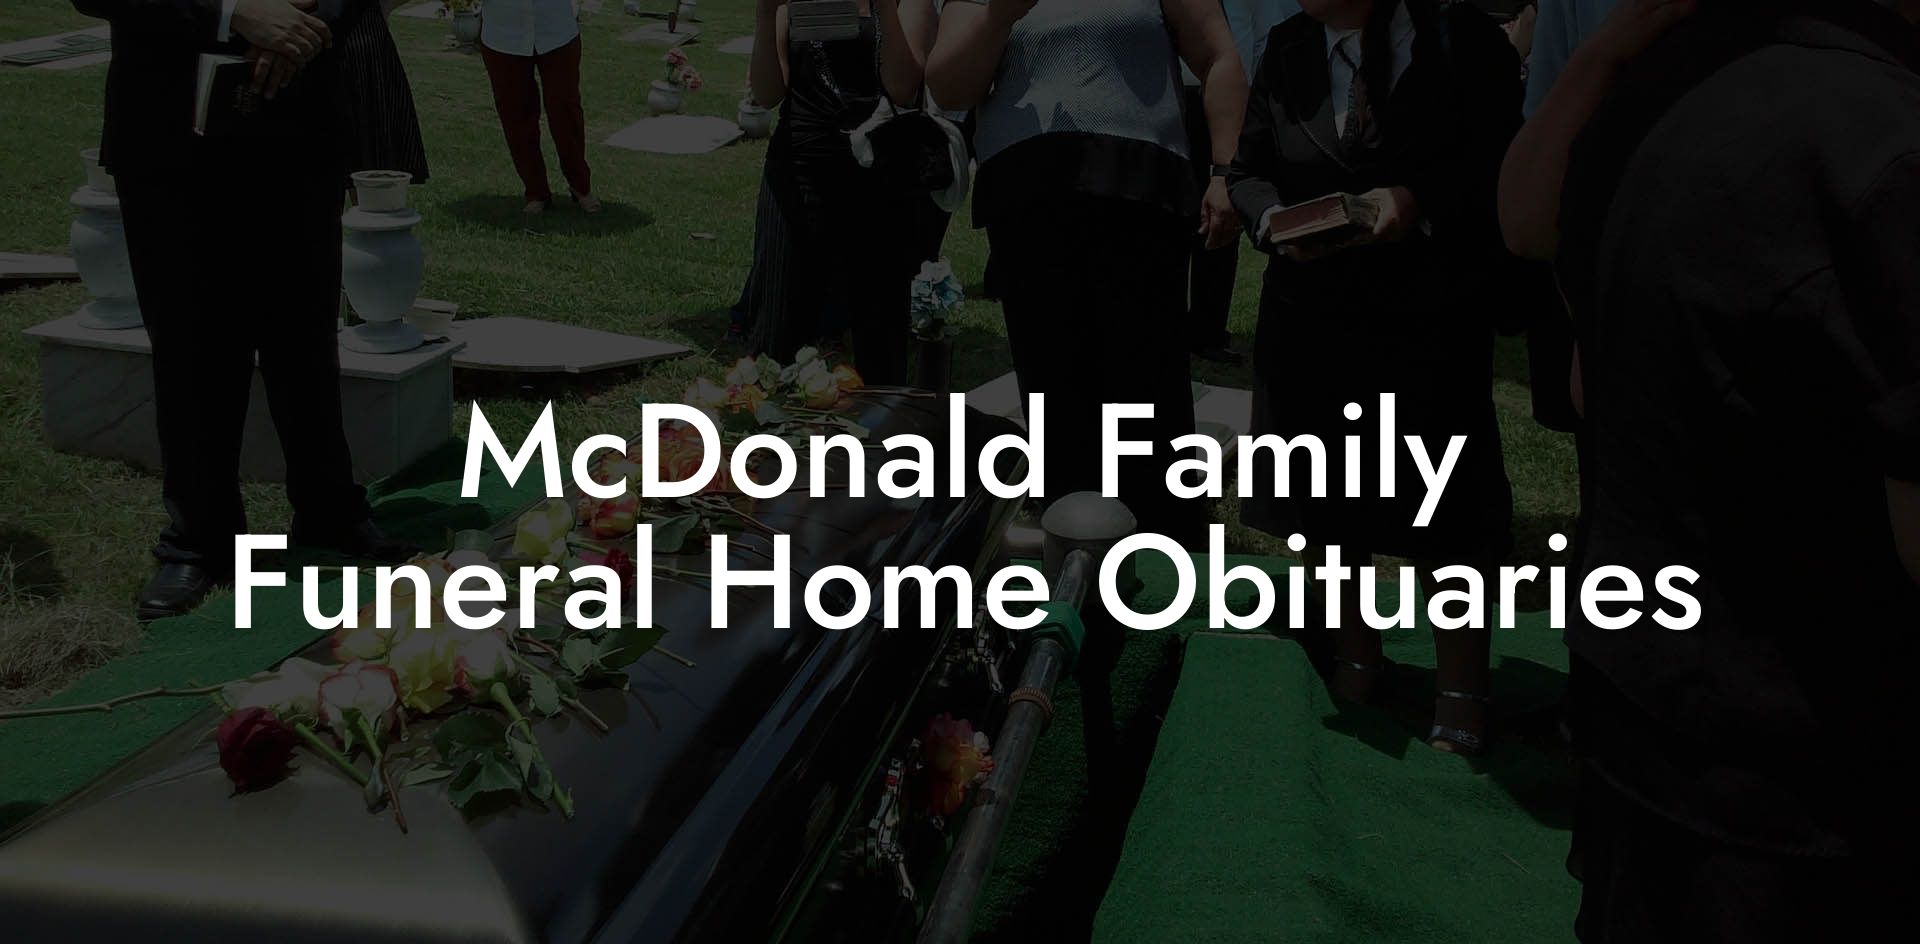 McDonald Family Funeral Home Obituaries